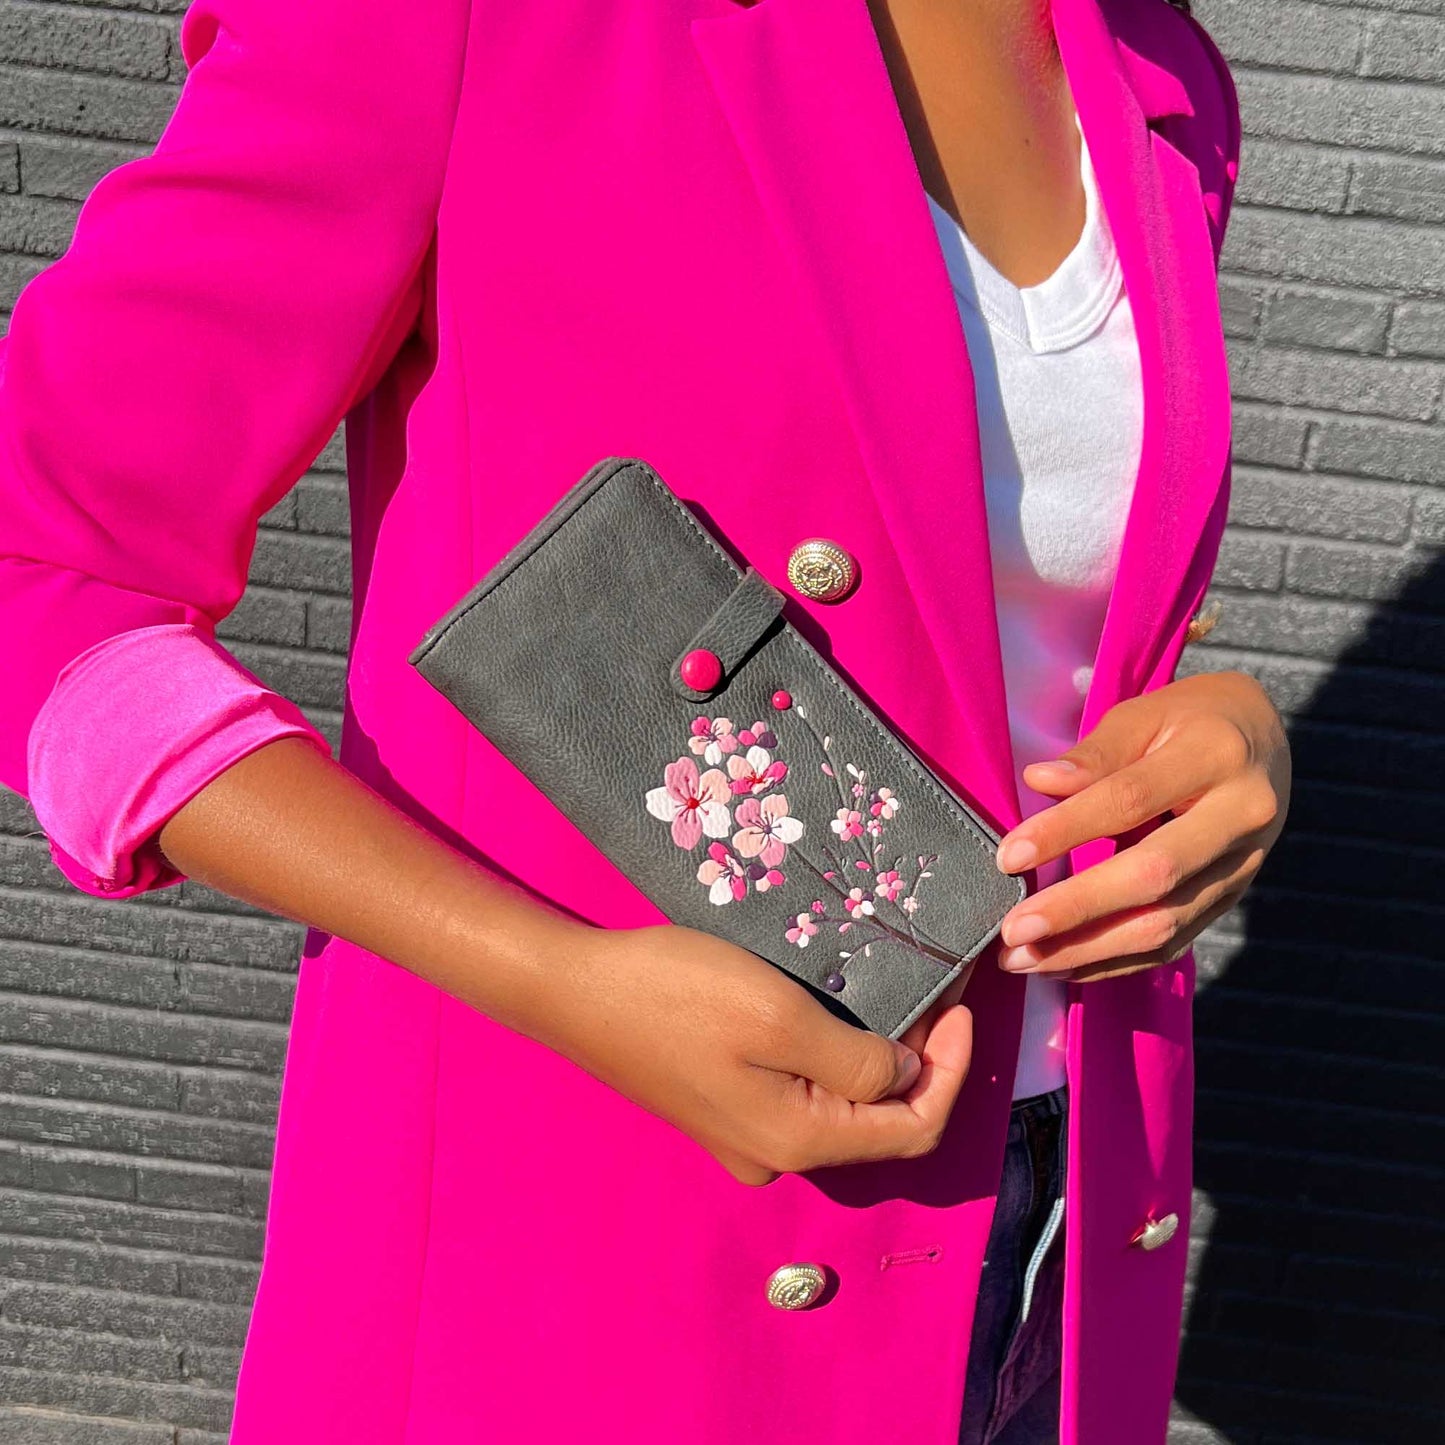 ESPE Gemma Vegan Leather Long Wallet with Cherry Blossom Appliqué